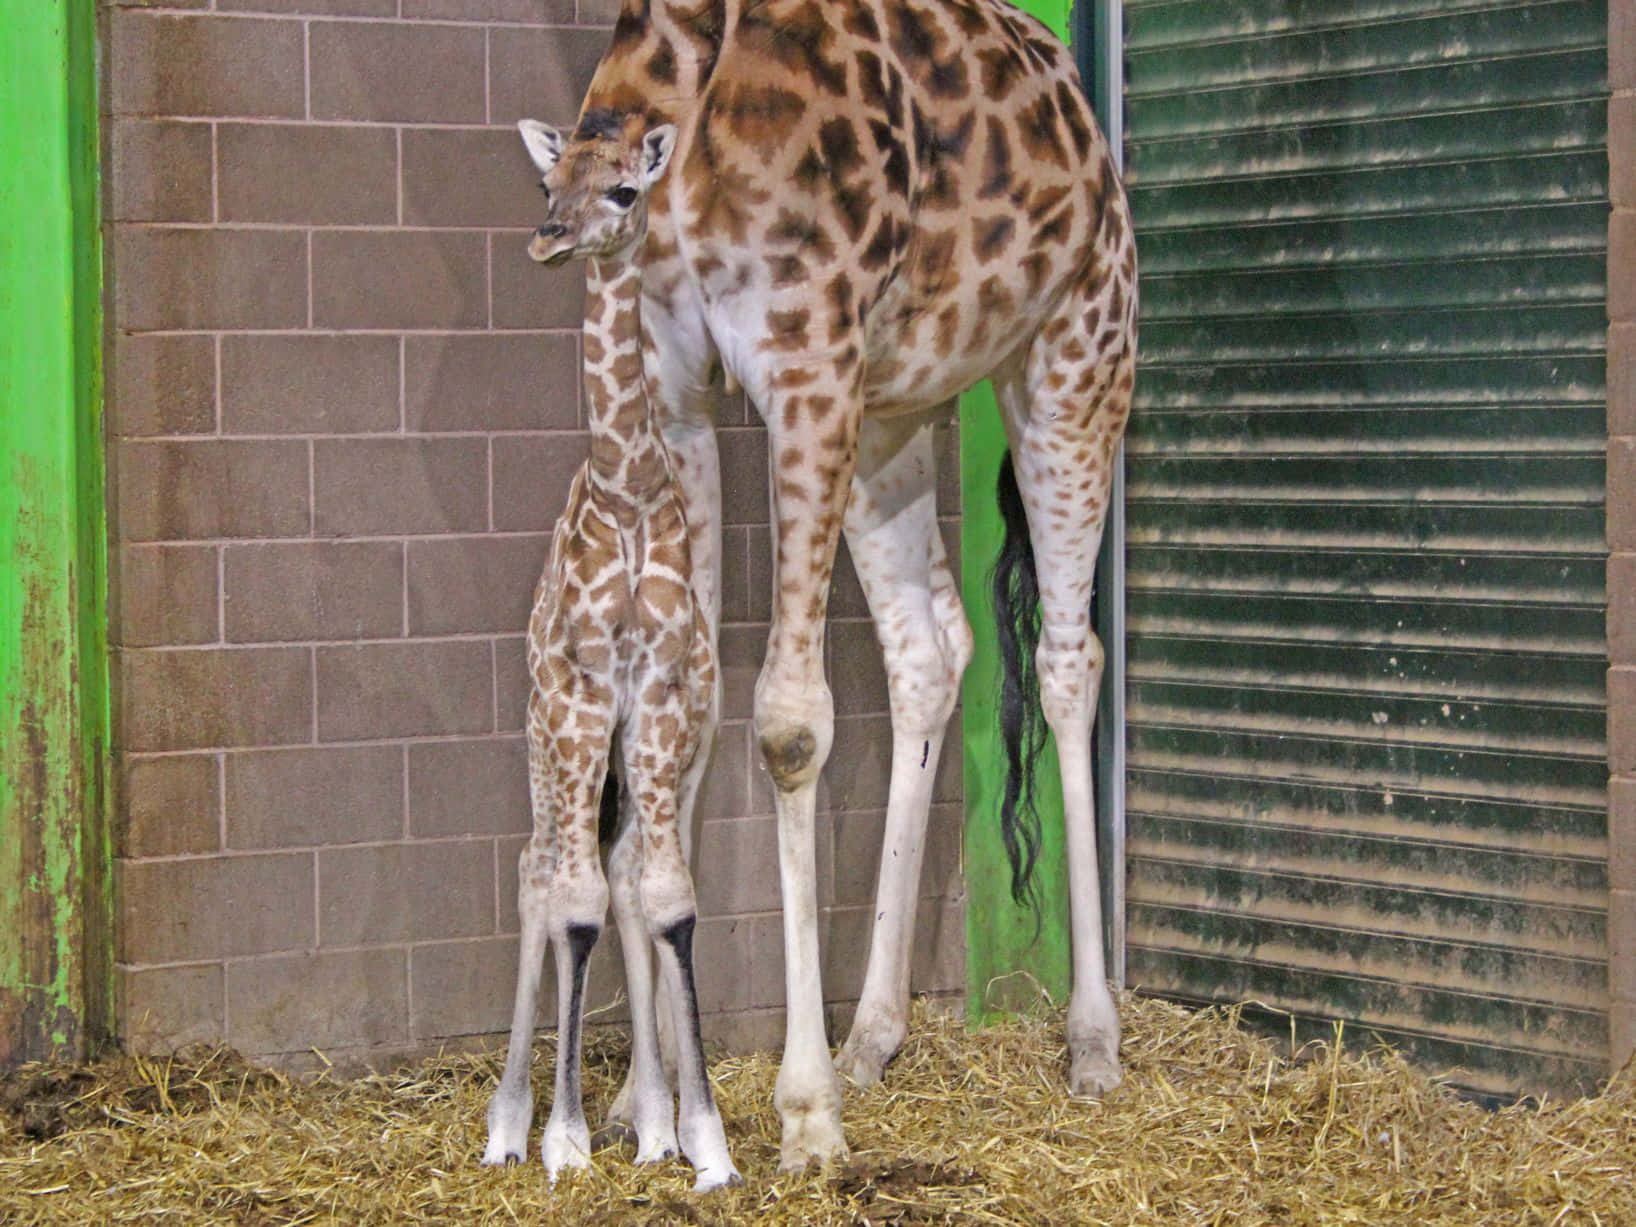 A cute Baby Giraffe having a snack